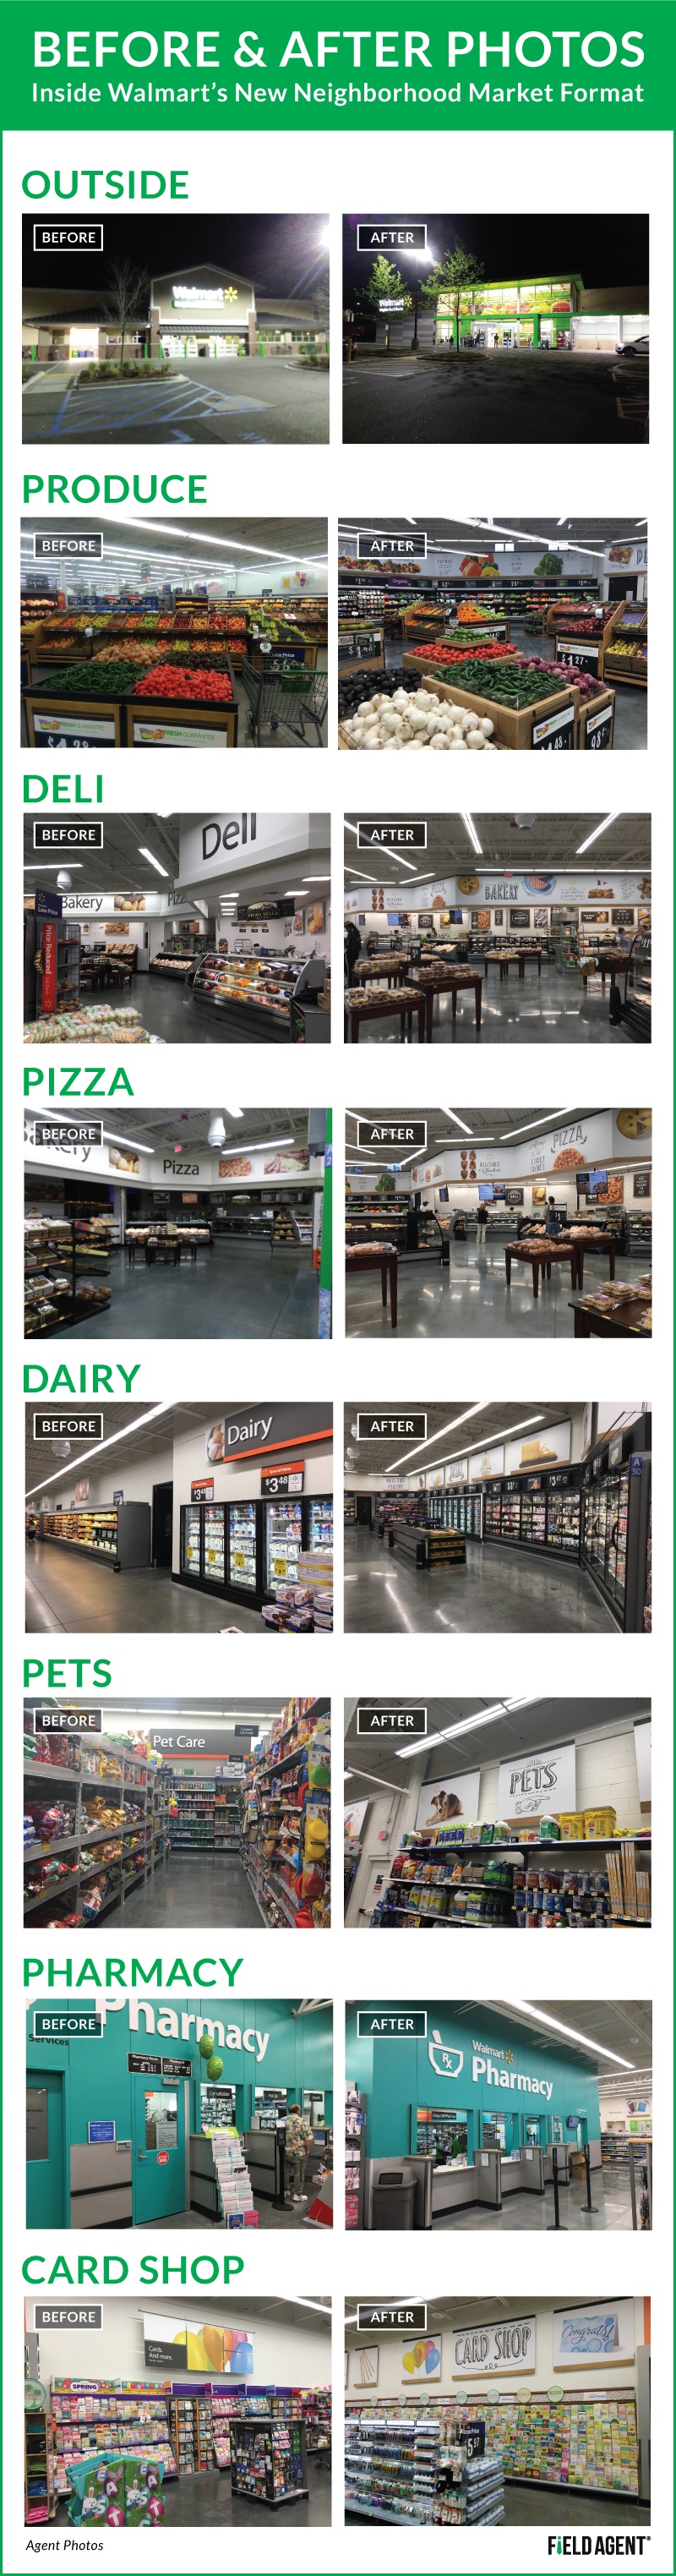 Before & After Photos of Walmart's New-Format Neighborhood Market